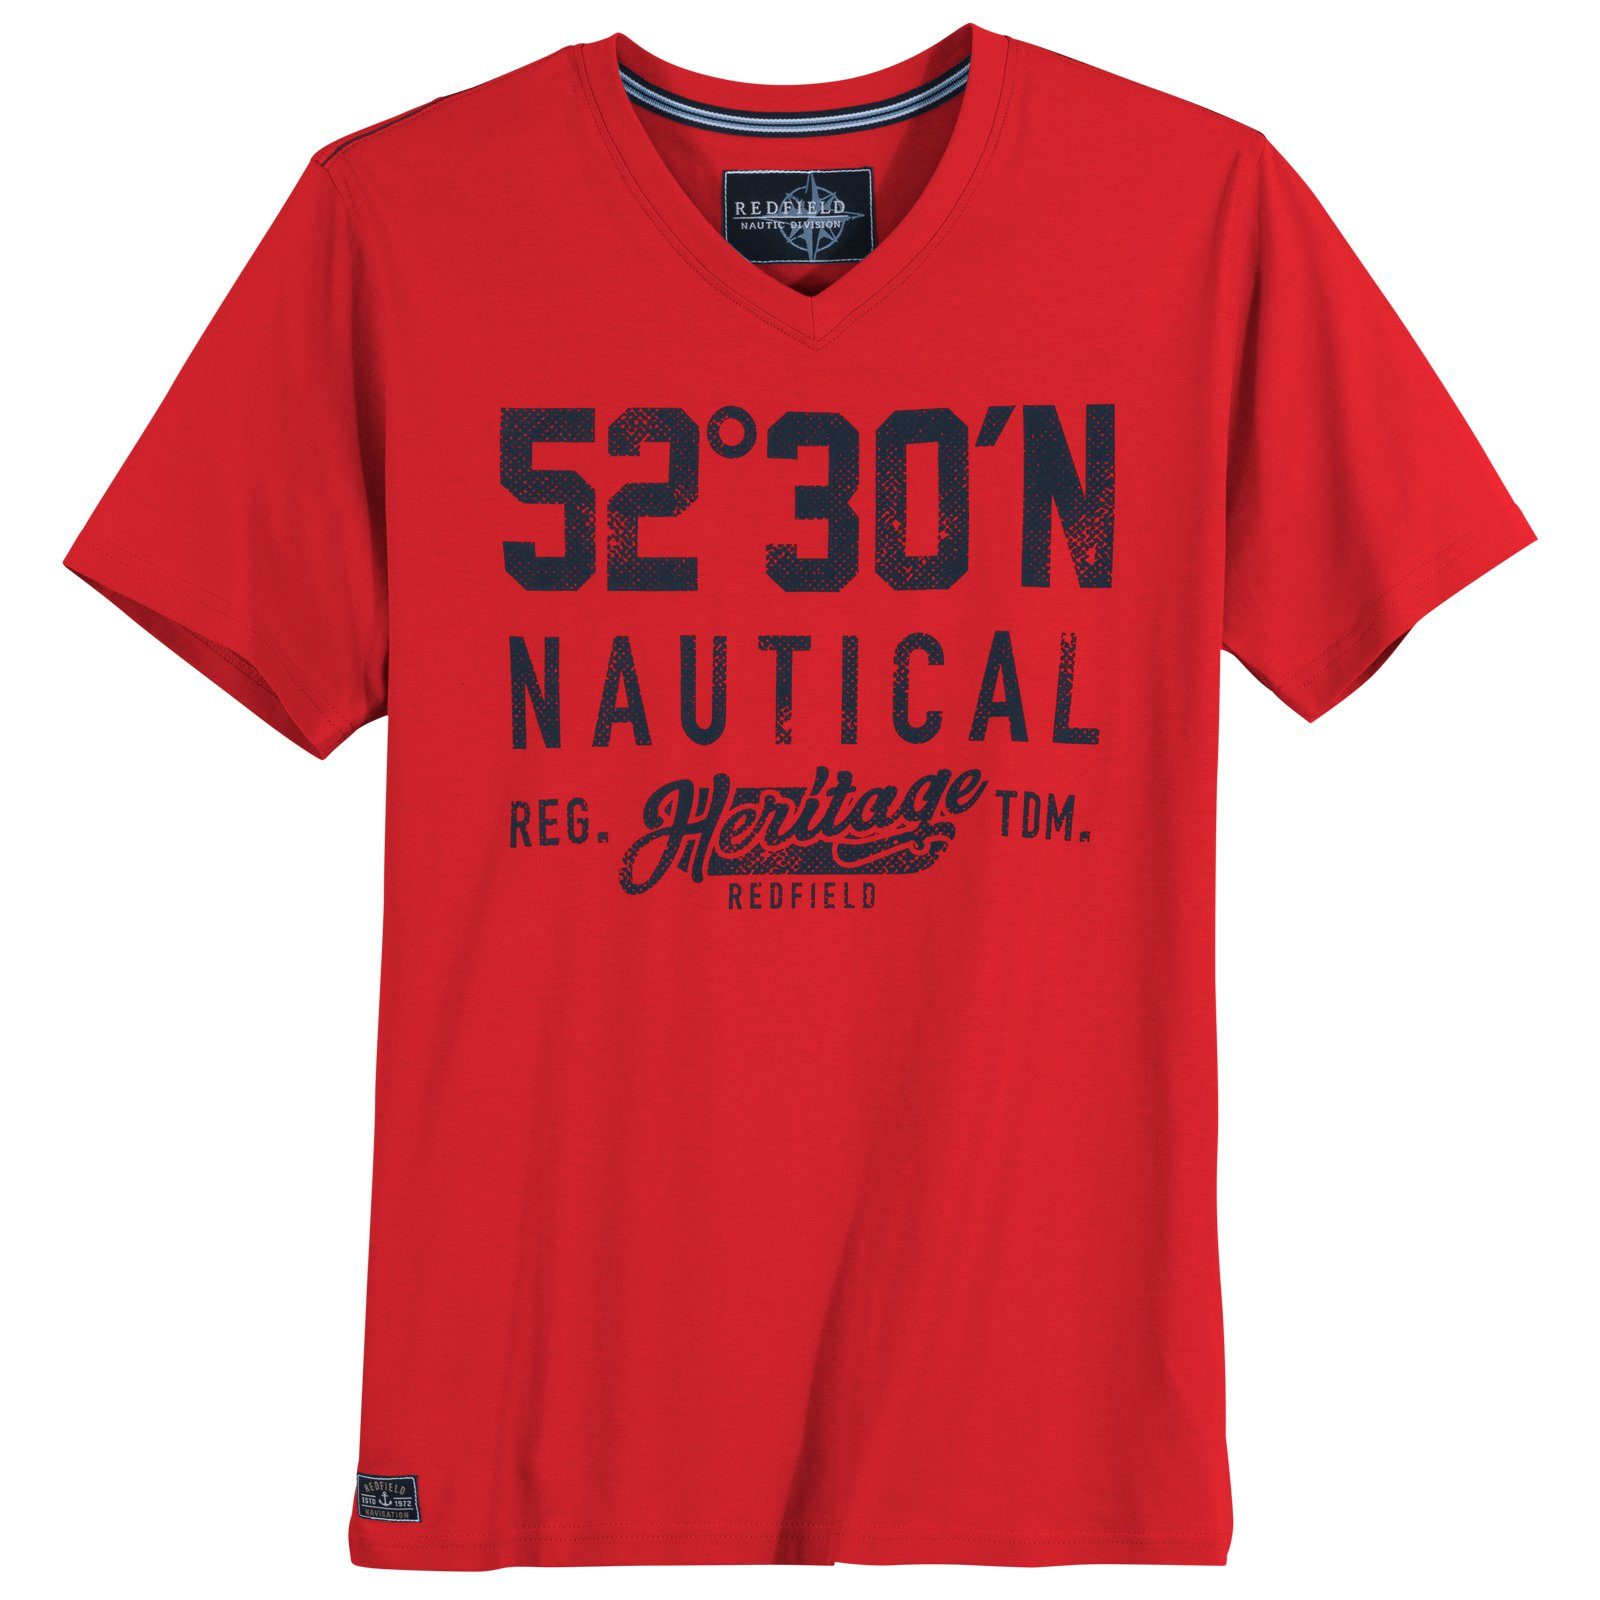 rot Herren Größen T-Shirt Große V-Neck 52°30'N Redfield Print-Shirt redfield